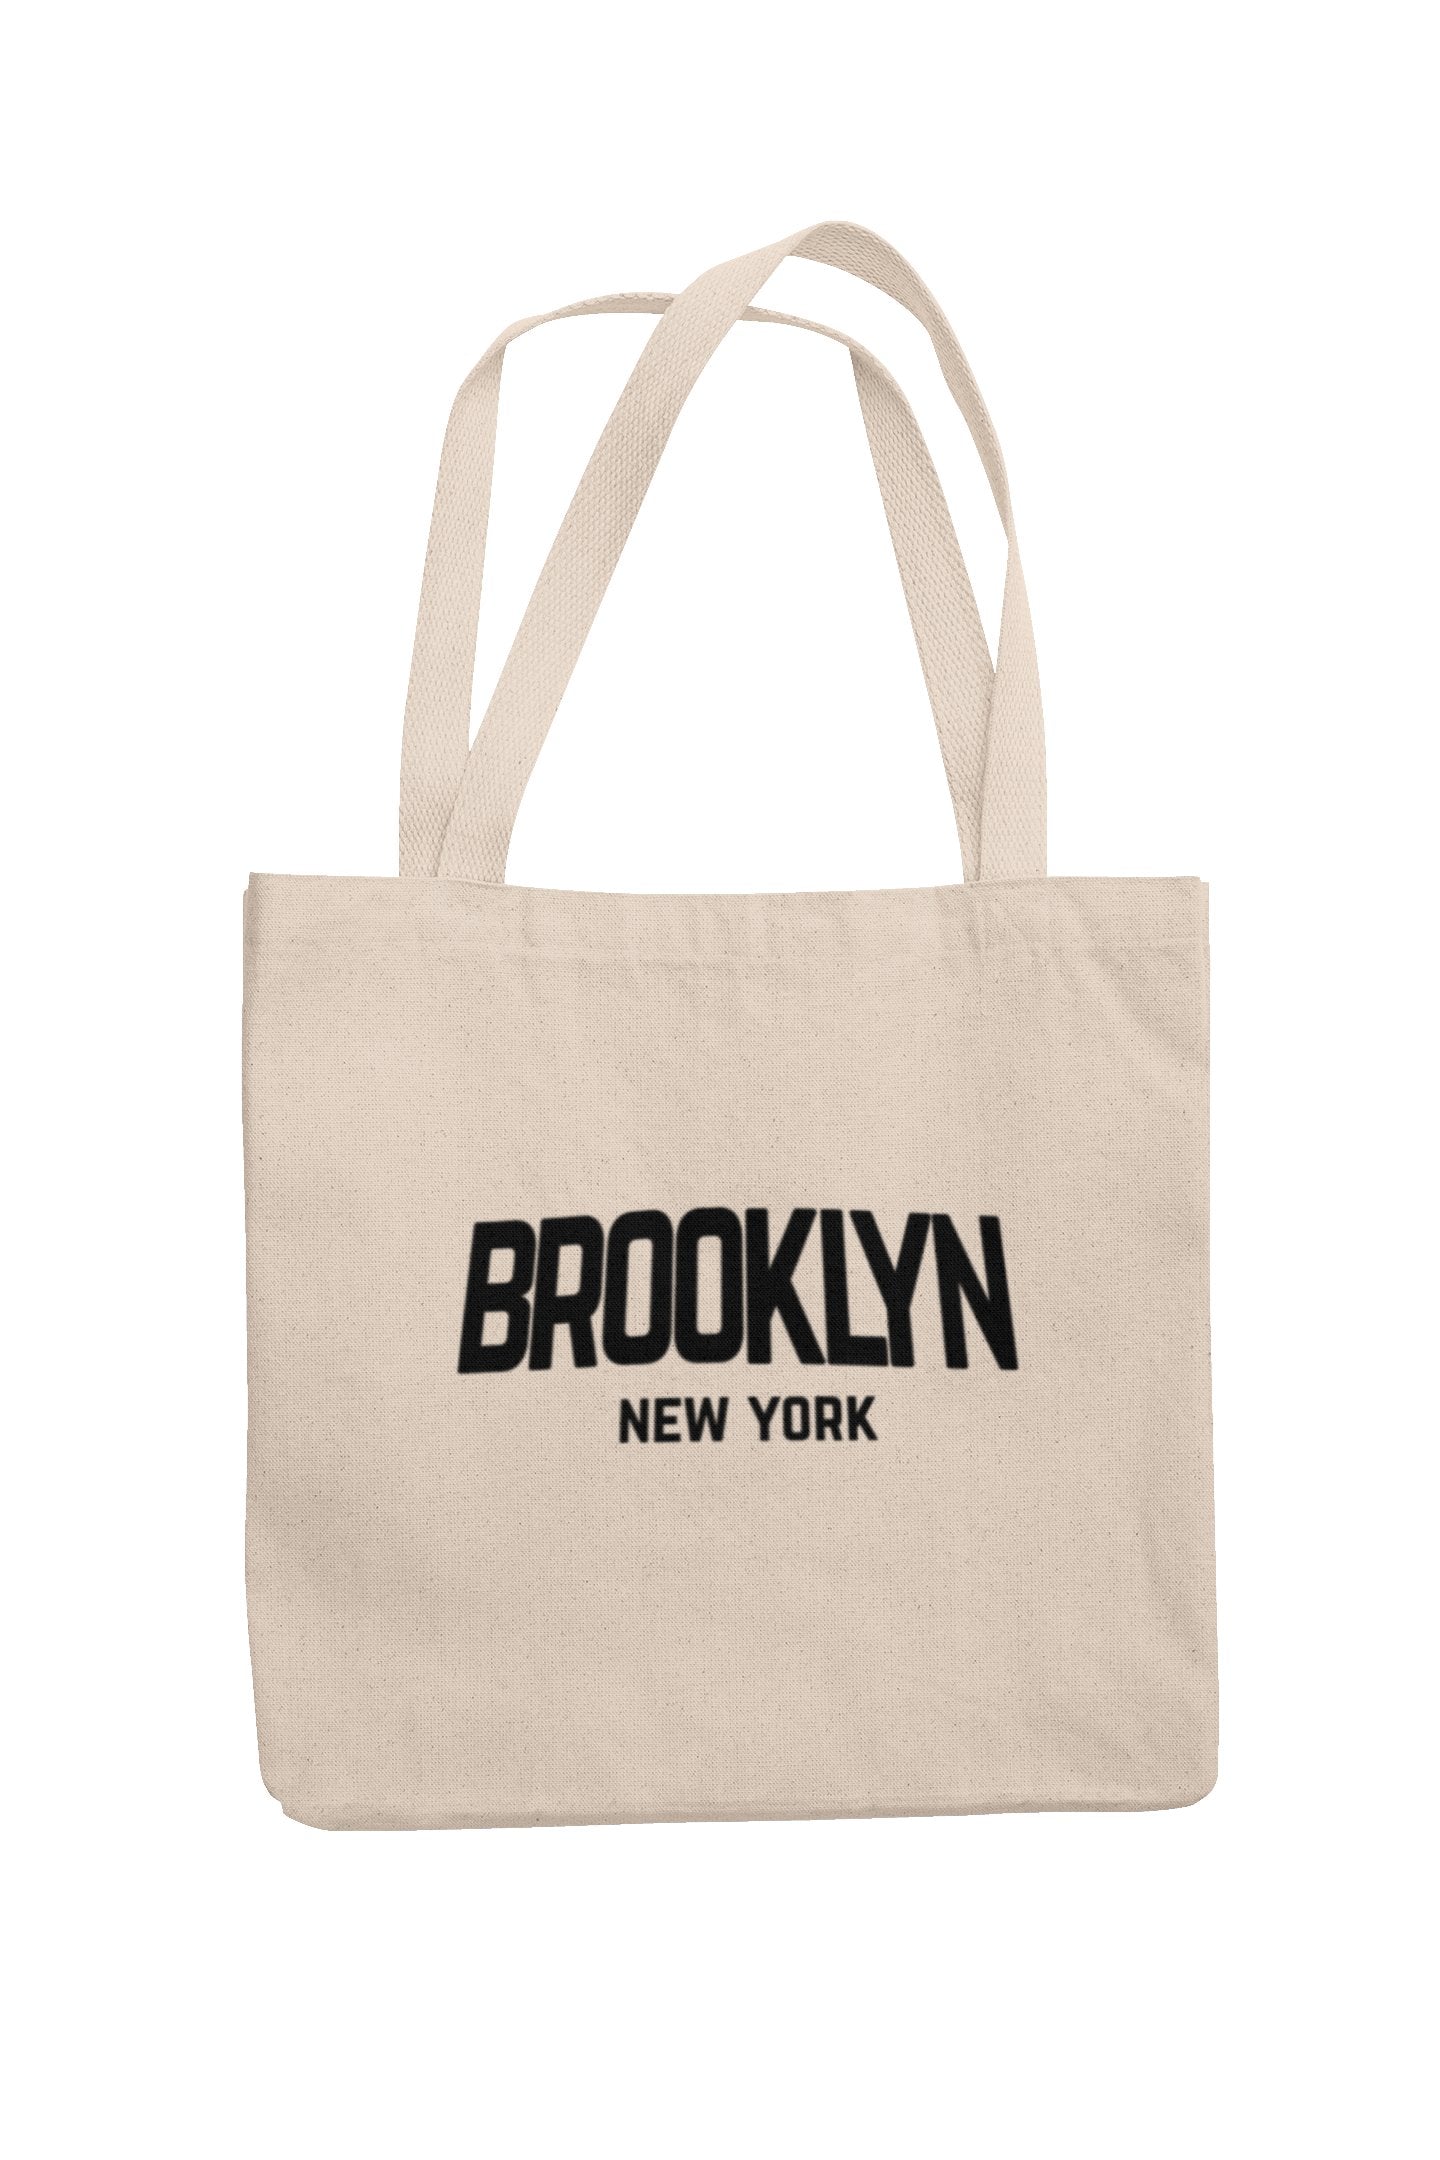 Brooklyn - Natural Handle - Tote Bag Vintage Style Retro City Cotton Canvas